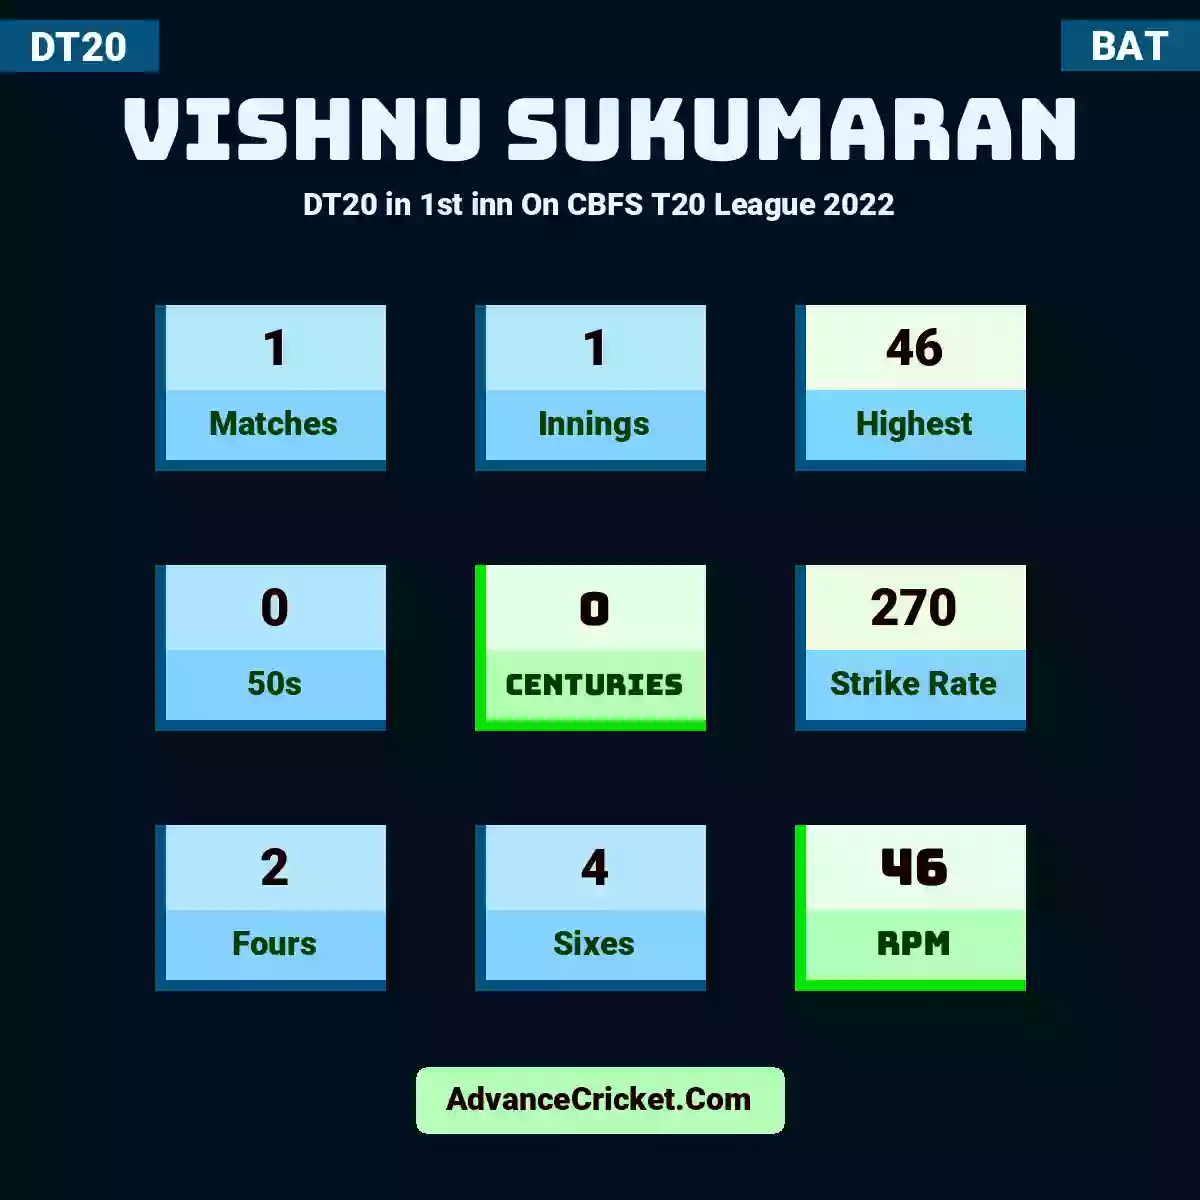 Vishnu Sukumaran DT20  in 1st inn On CBFS T20 League 2022, Vishnu Sukumaran played 1 matches, scored 46 runs as highest, 0 half-centuries, and 0 centuries, with a strike rate of 270. V.Sukumaran hit 2 fours and 4 sixes, with an RPM of 46.